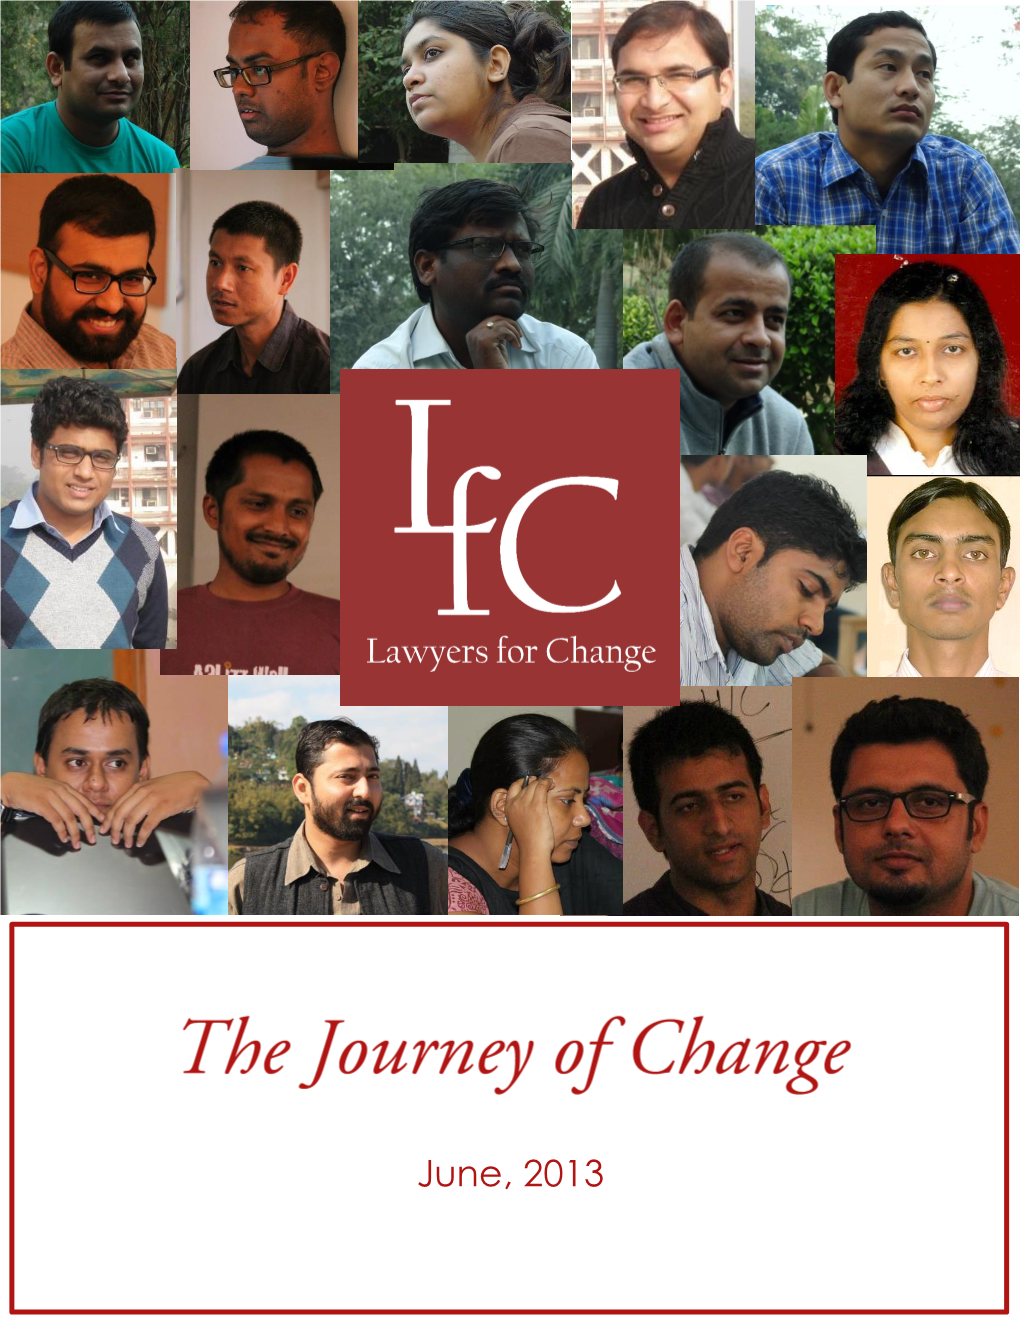 The Journey of Change, June 2013